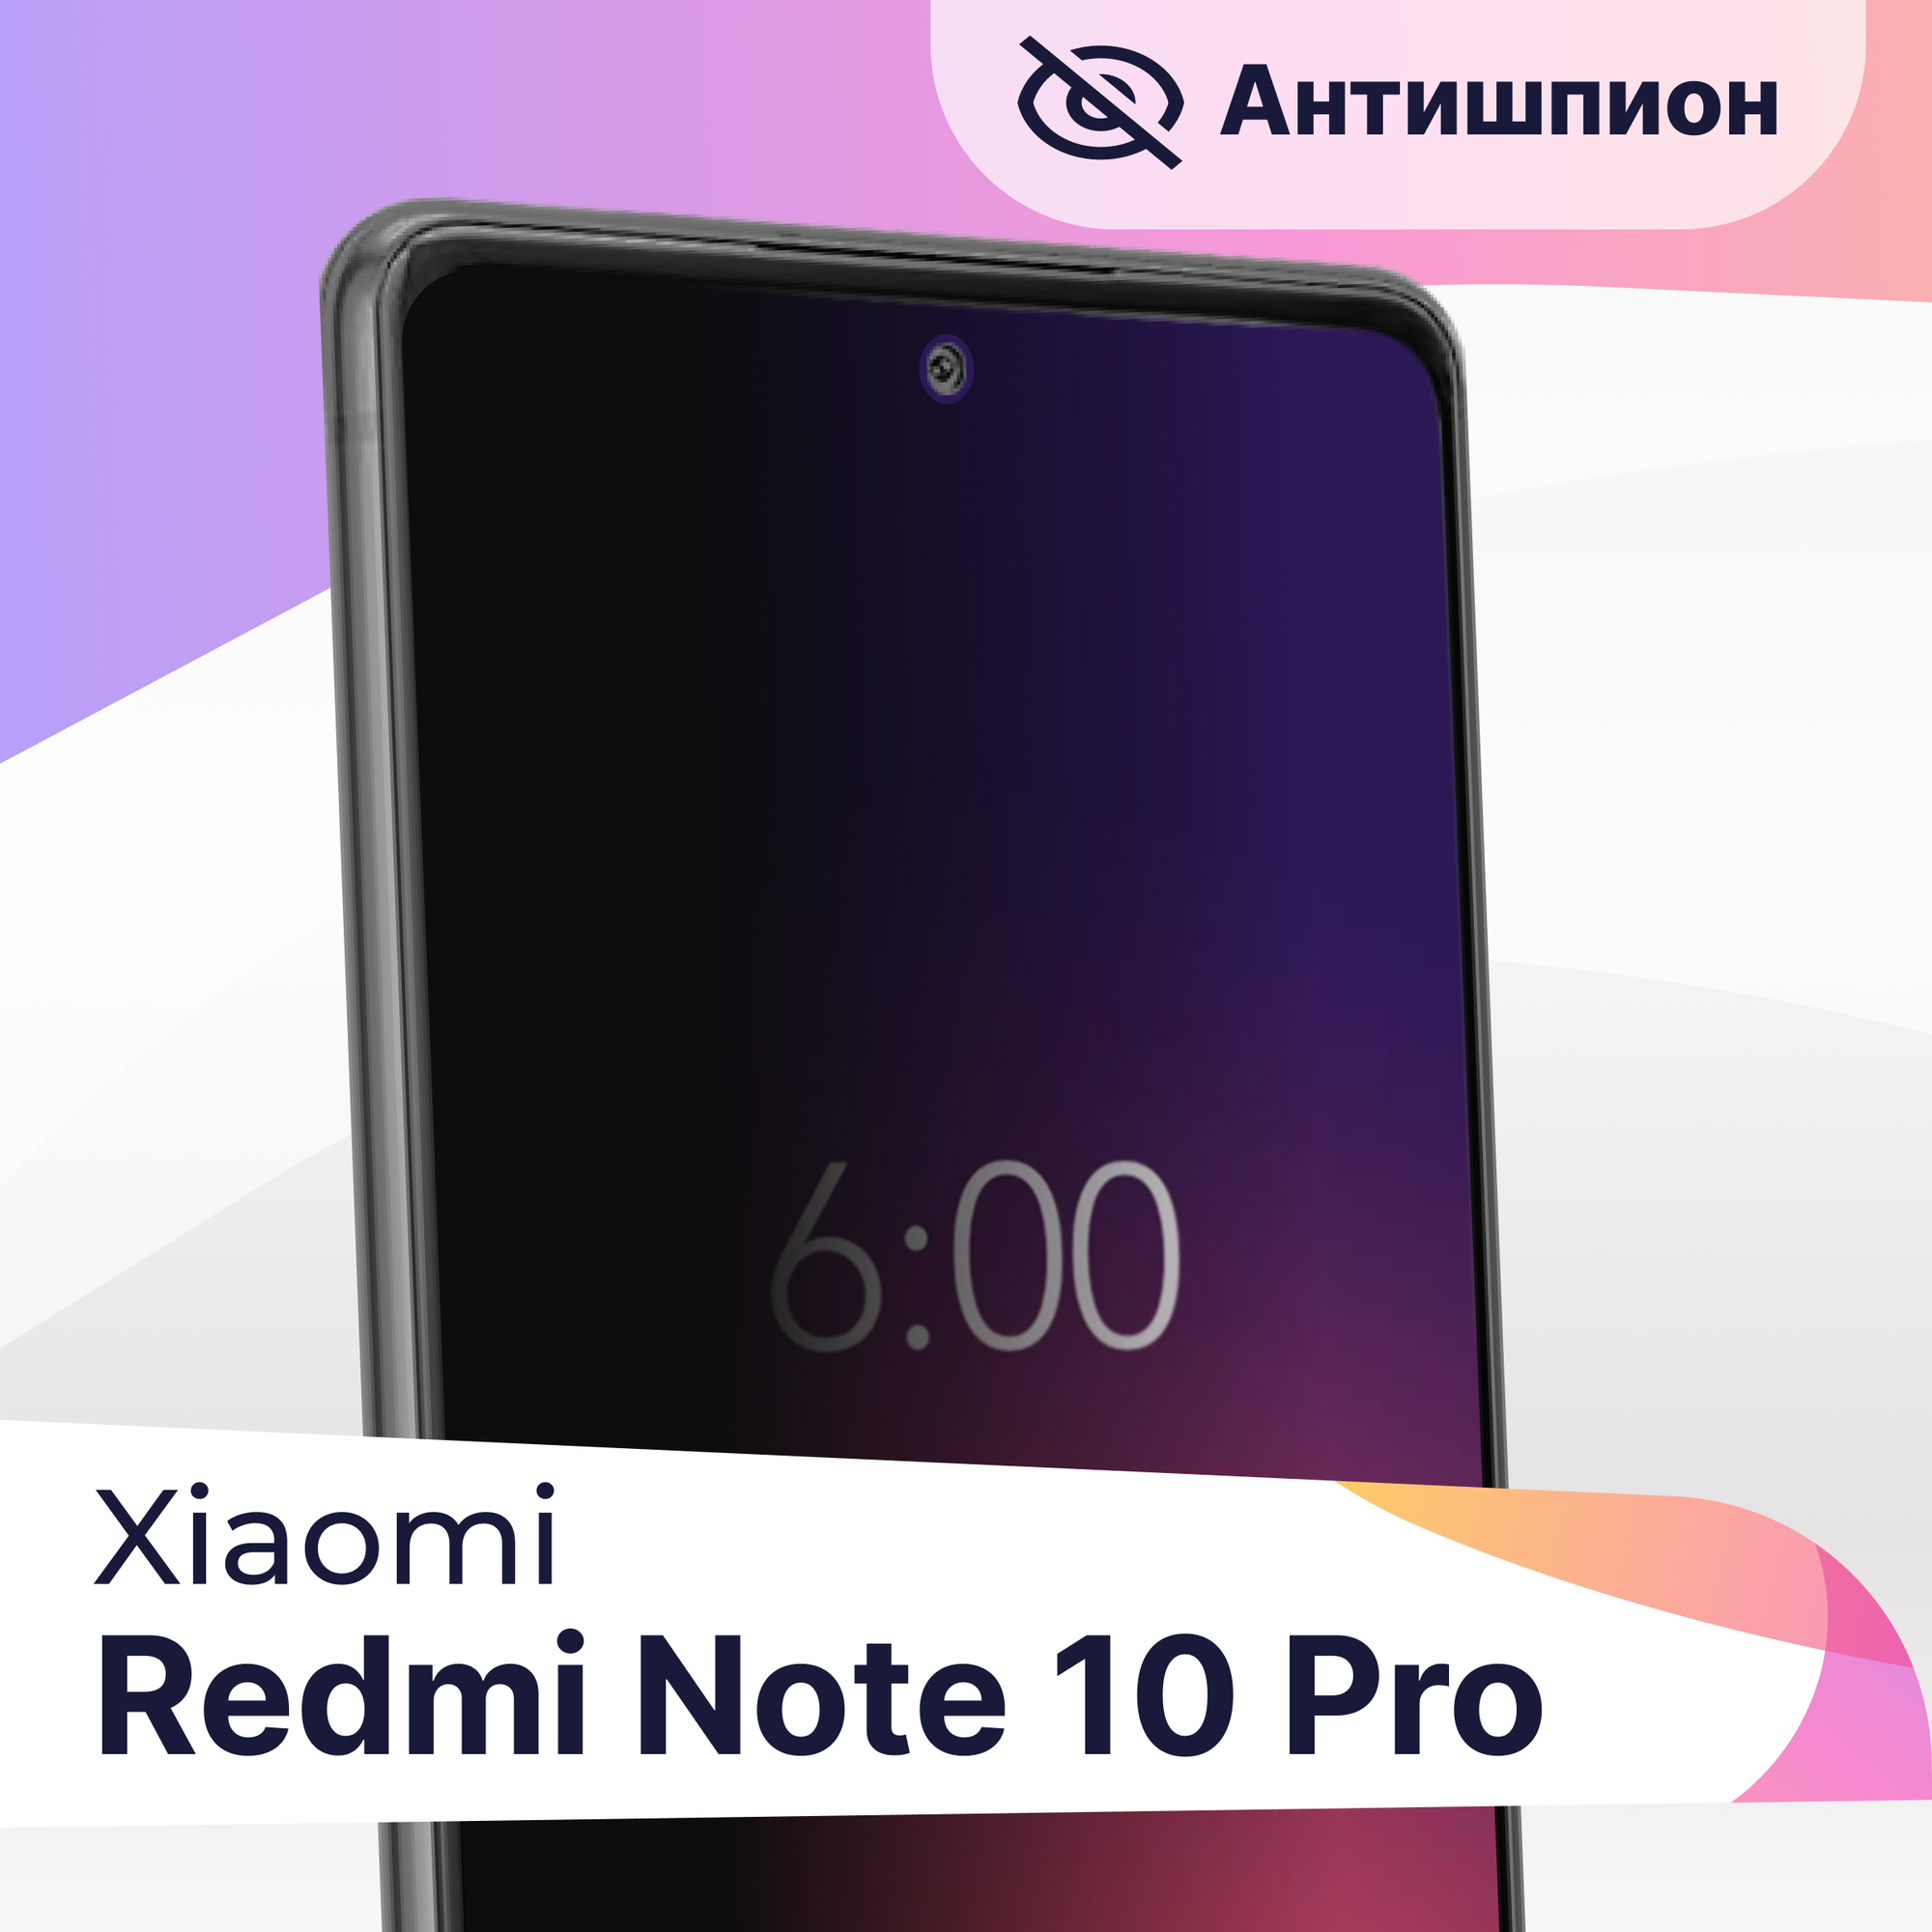 Защитное стекло Антишпион на телефон Xiaomi Redmi Note 10 Pro / Premium 5D стекло для смартфона Сяоми Редми Нот 10 Про с черной рамкой